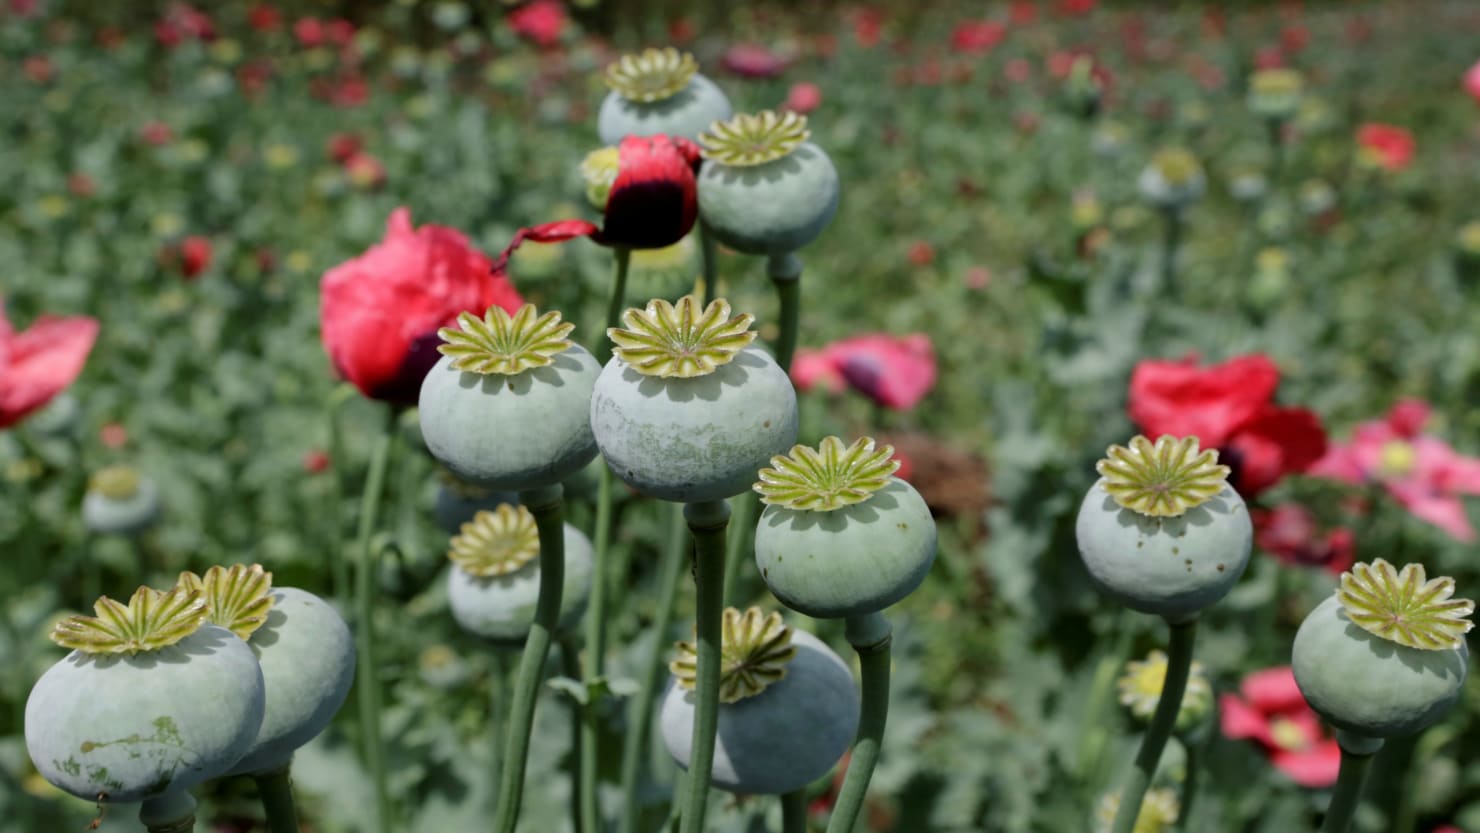 North Carolina Police Stumble Upon $500M Opium-Producing Operation